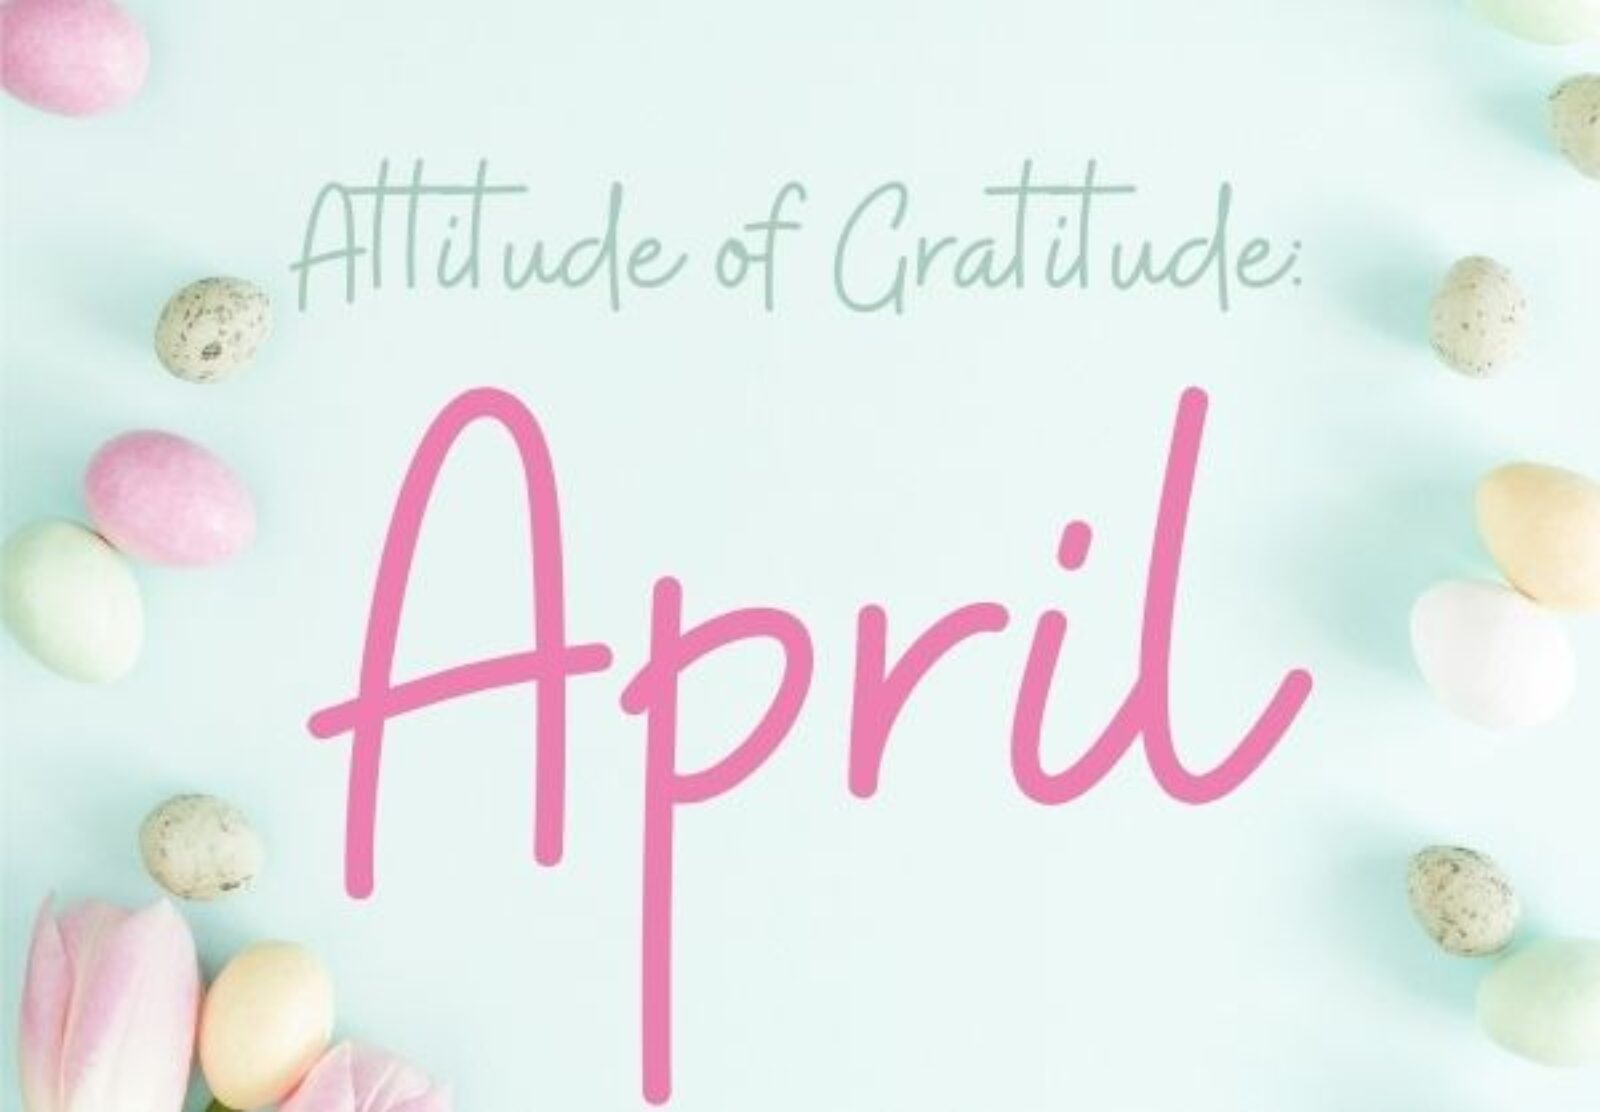 Attitude of Gratitude: April Photo Challenges